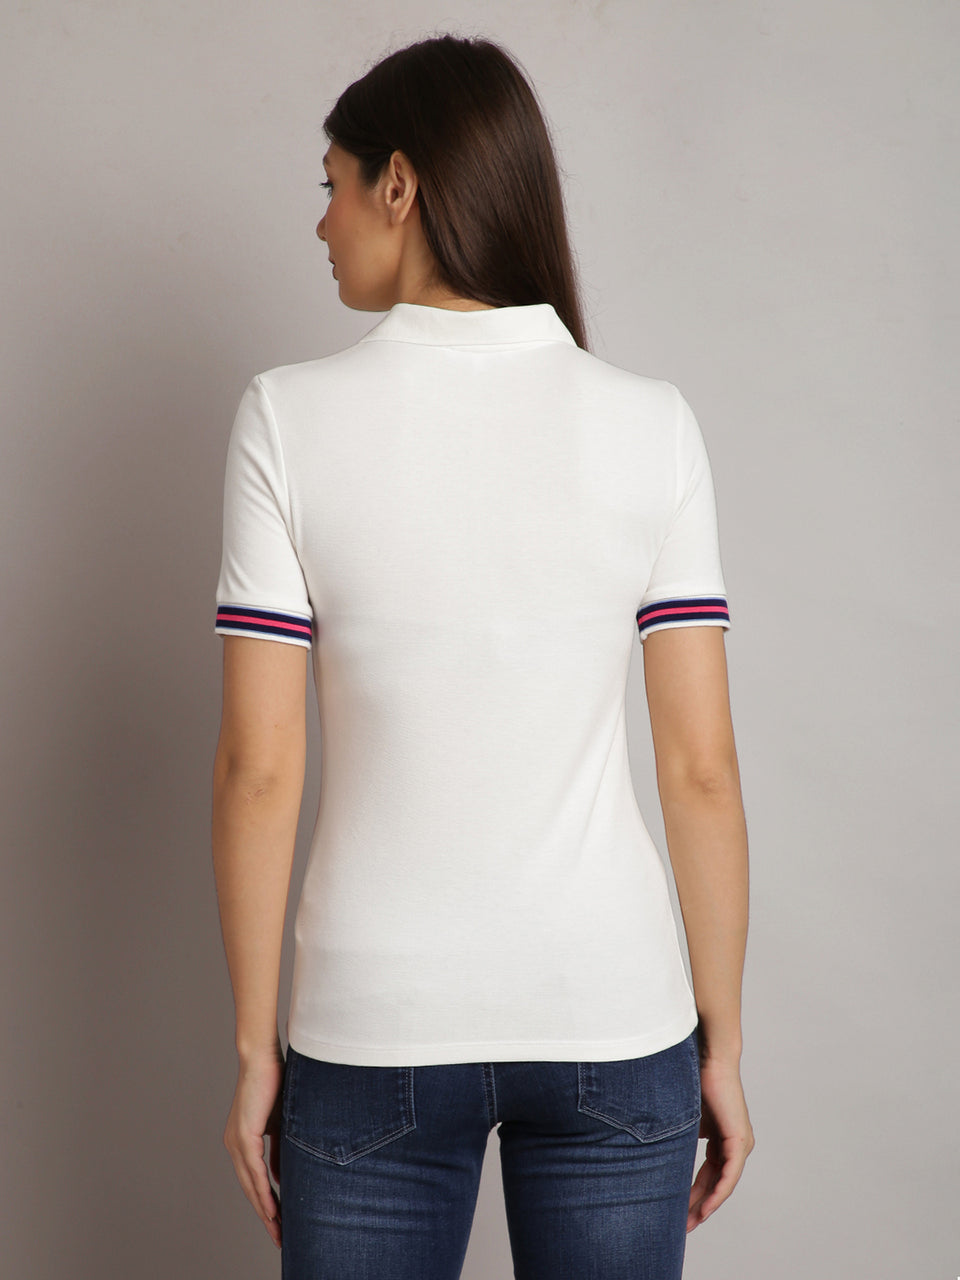 women solid white cotton polo t-shirt